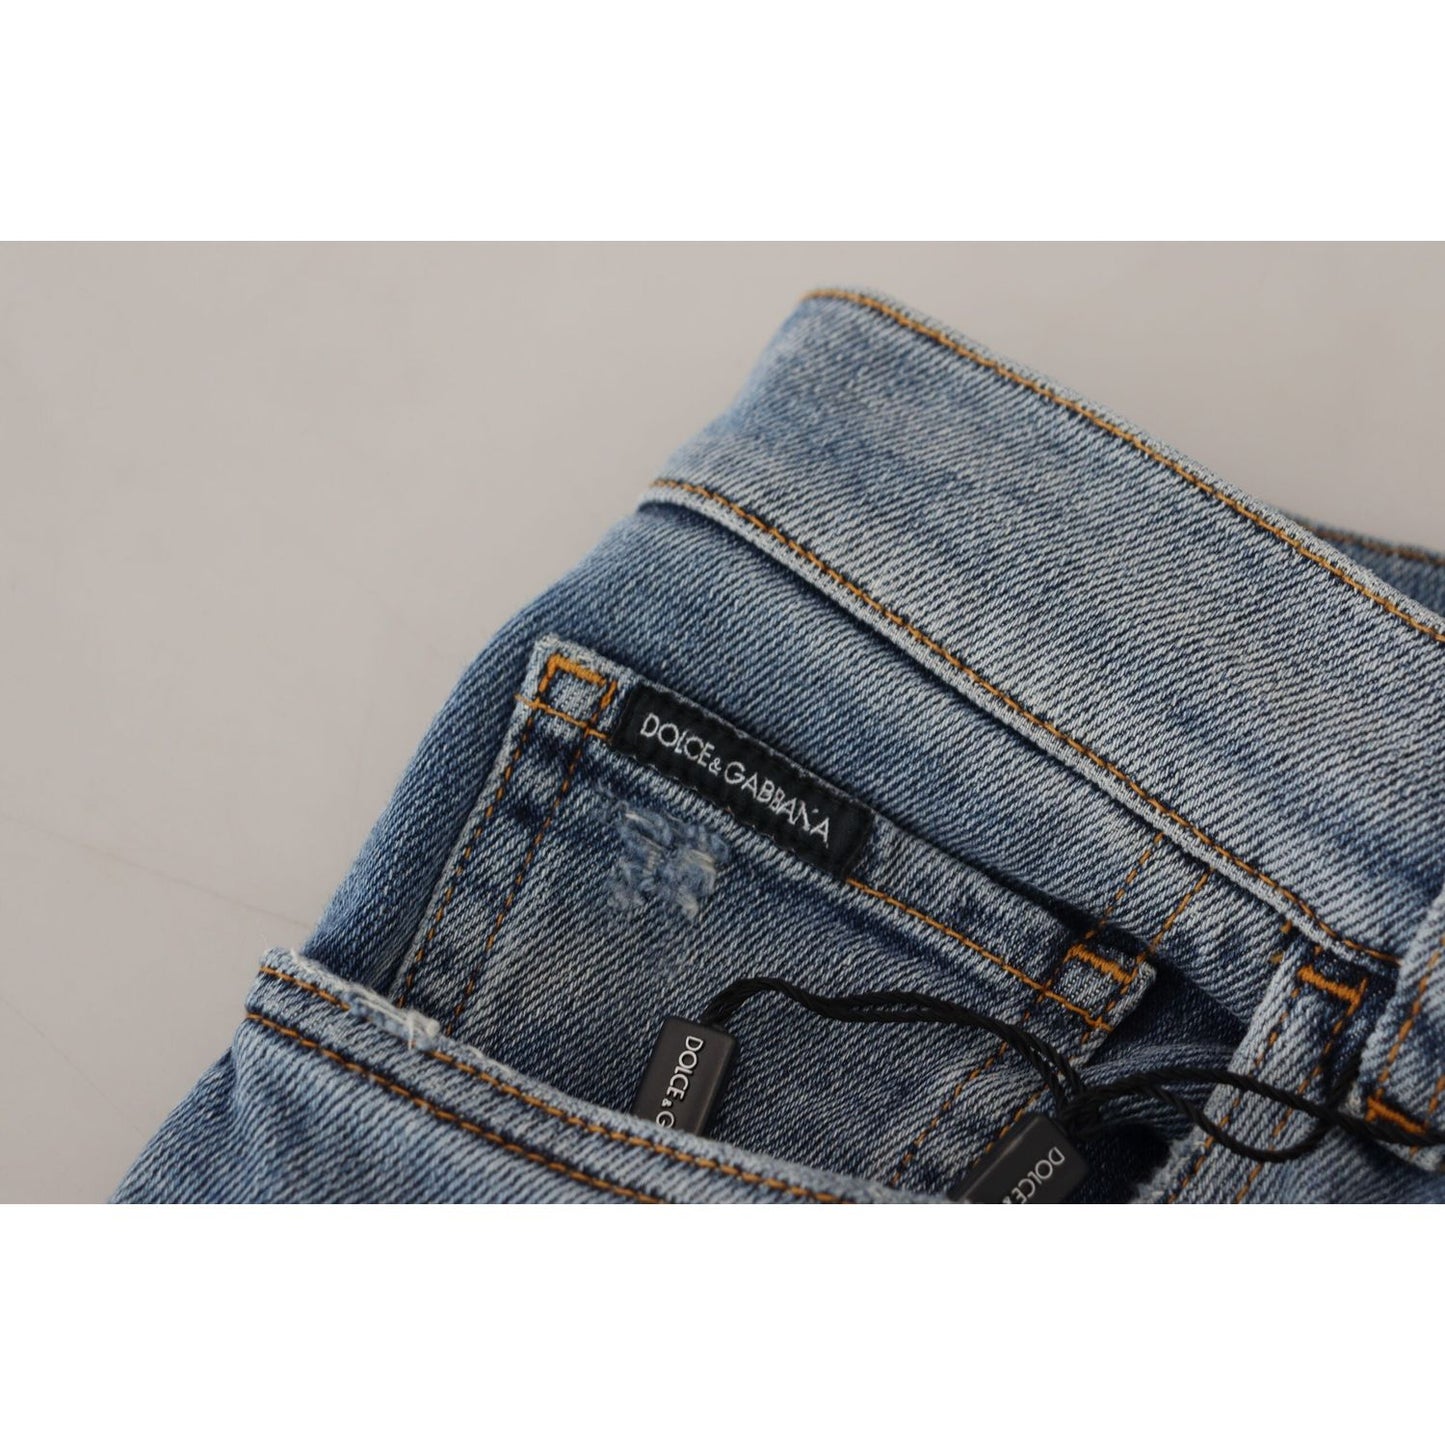 Dolce & Gabbana Chic Slim Fit Italian Denim Jeans blue-slim-fit-tattered-cotton-denim-jeans IMG_6146-scaled-b88e678c-c2b.jpg